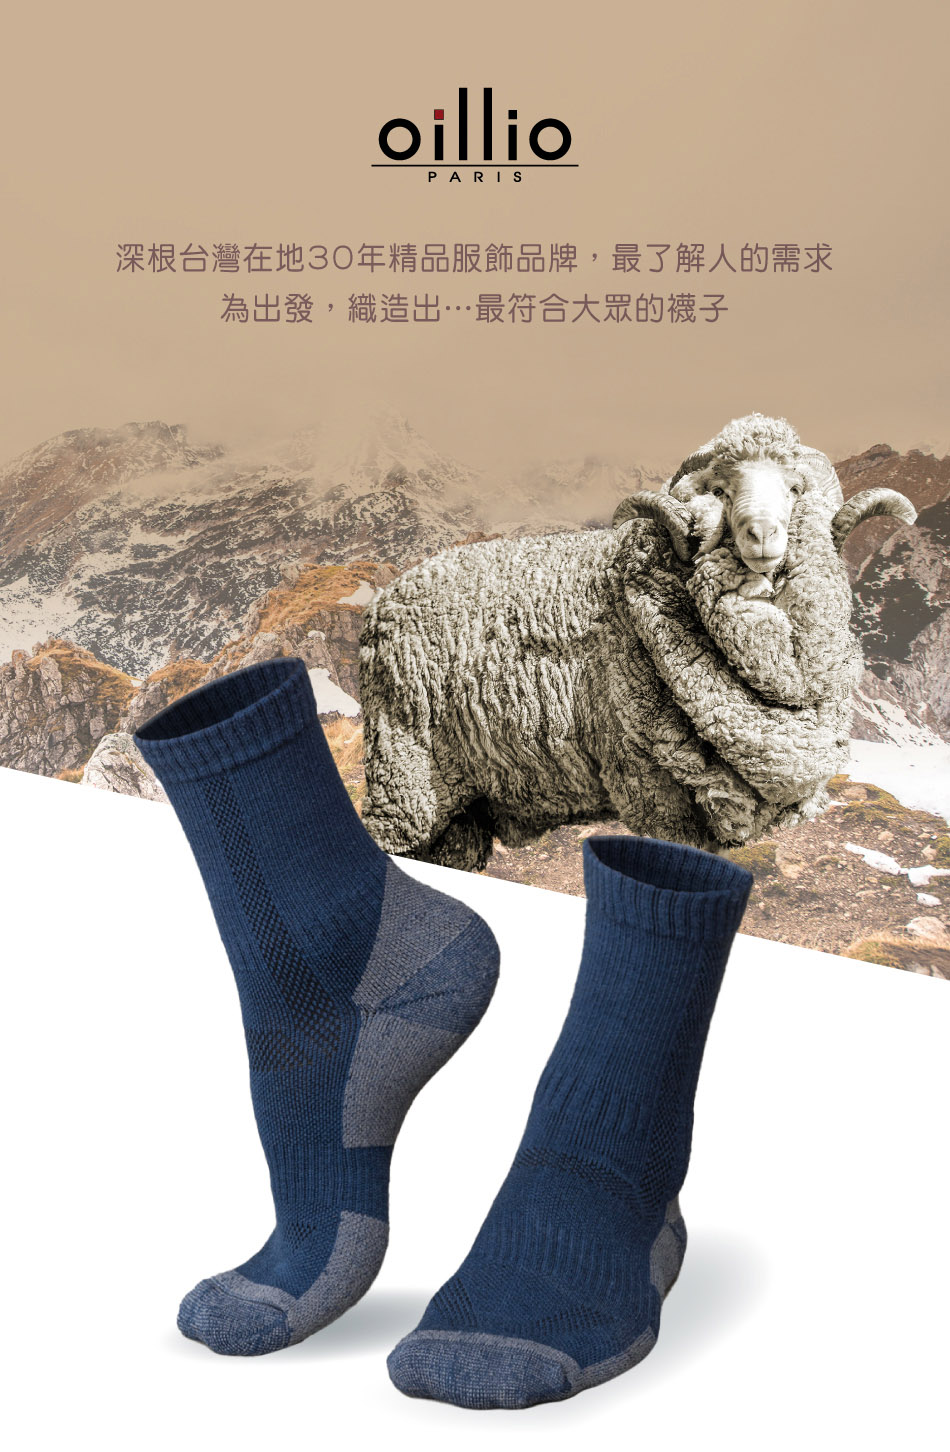 oillio 歐洲貴族 美麗諾羊毛保暖襪 蓄熱保暖 50%羊